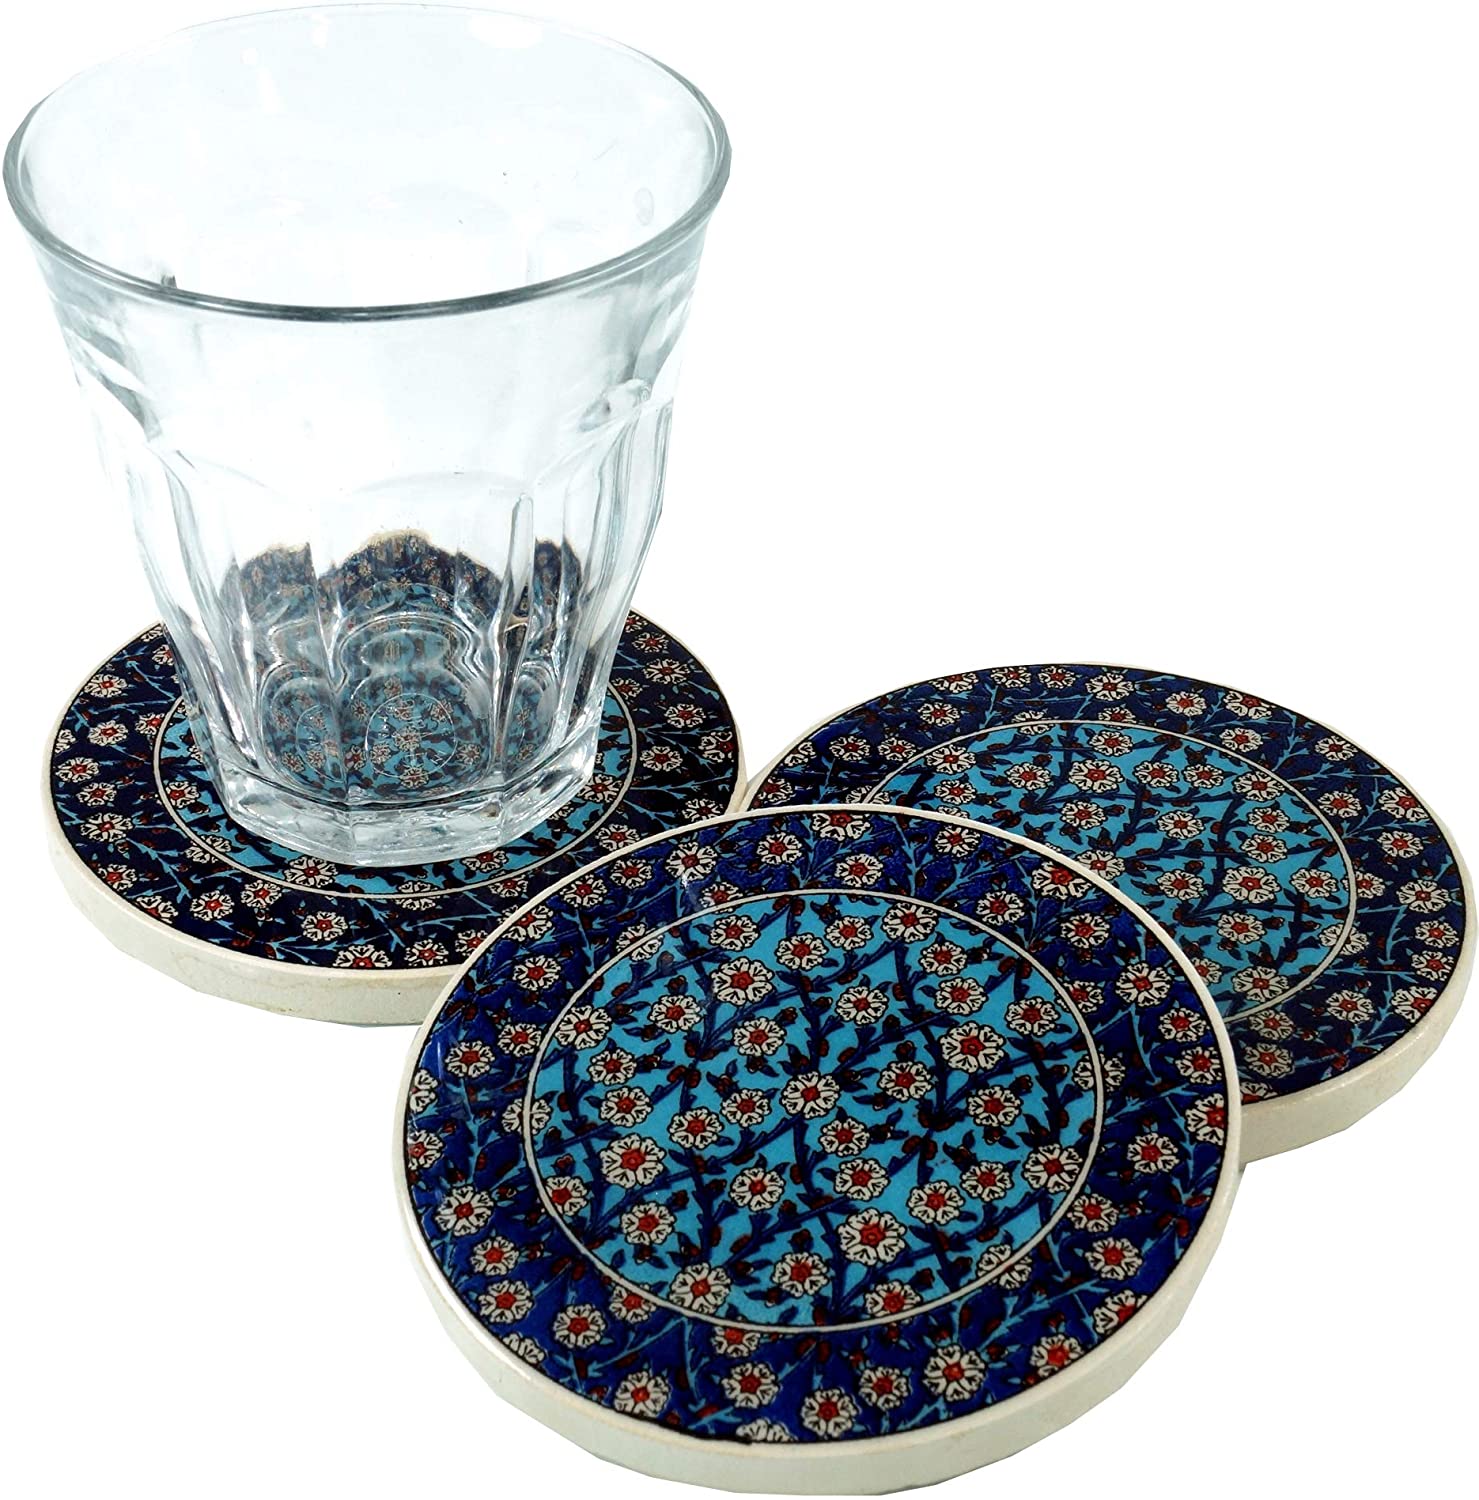 GURU SHOP Oriental Ceramic Coasters, Round Coasters for Glasses, Cups with Mandala Motif Set - Pattern 1, Blue, Quantity: Set of 6, 1 x 8 x 8 cm, Coasters, Trays